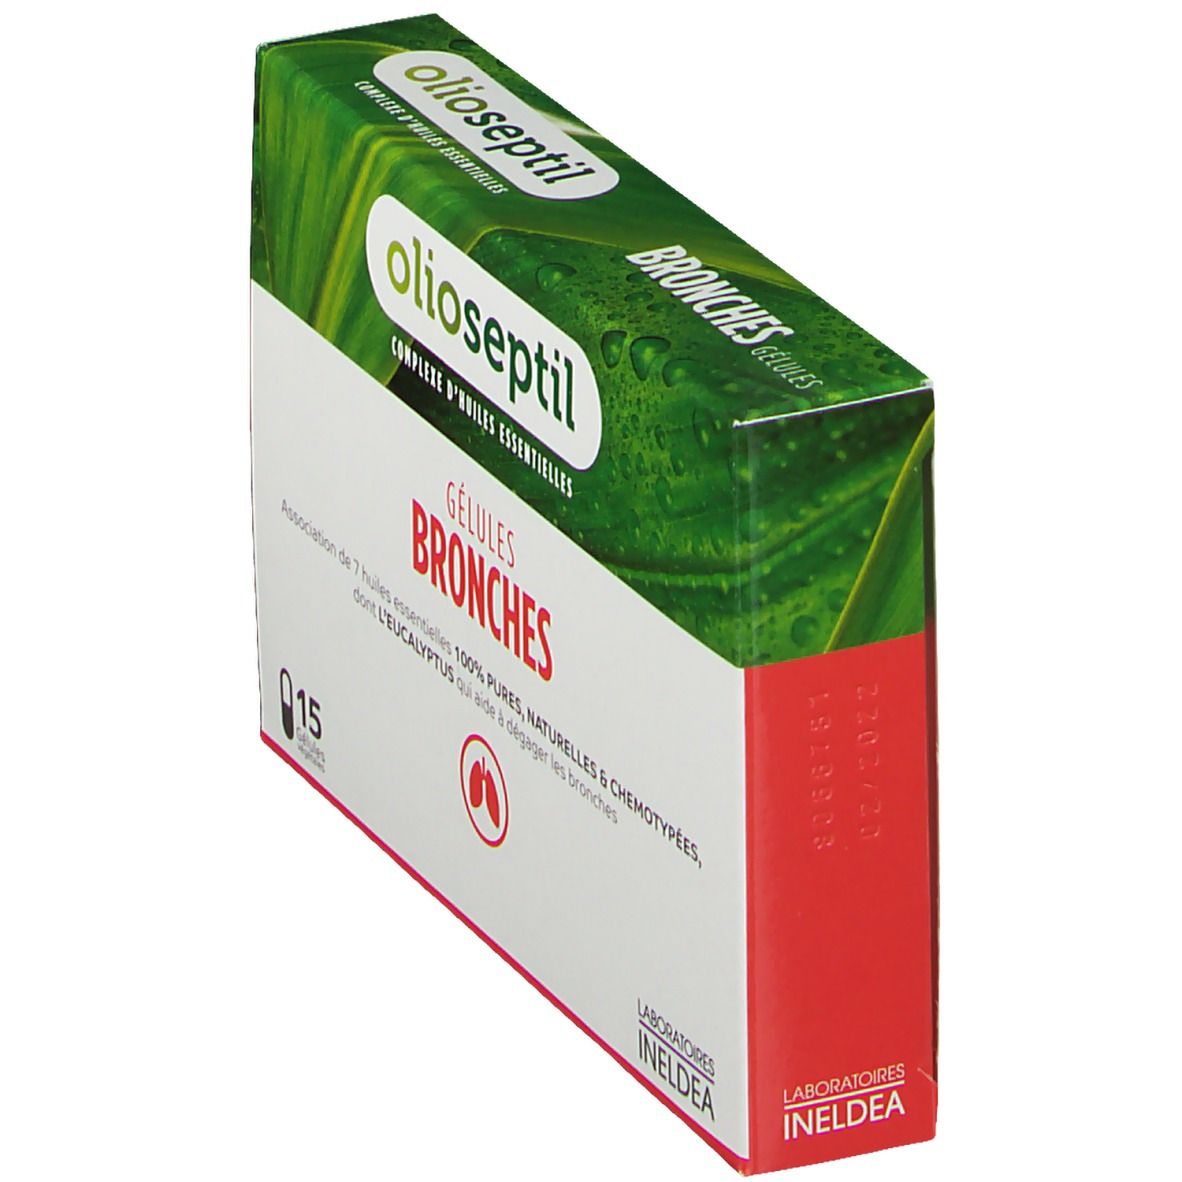 Olioseptil® bronches